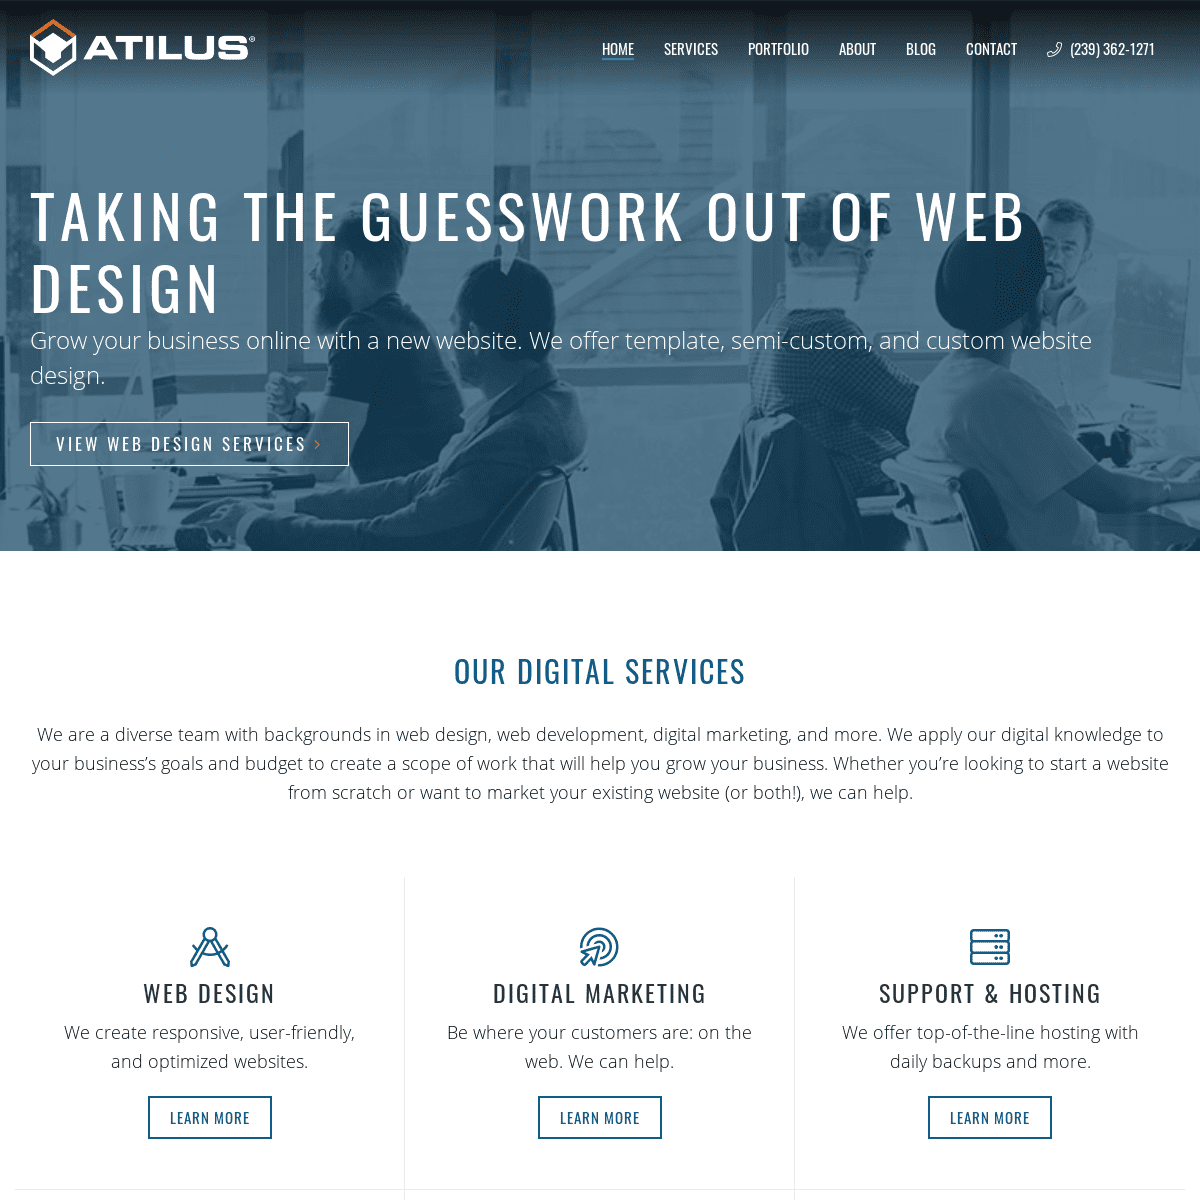 A complete backup of atilus.com